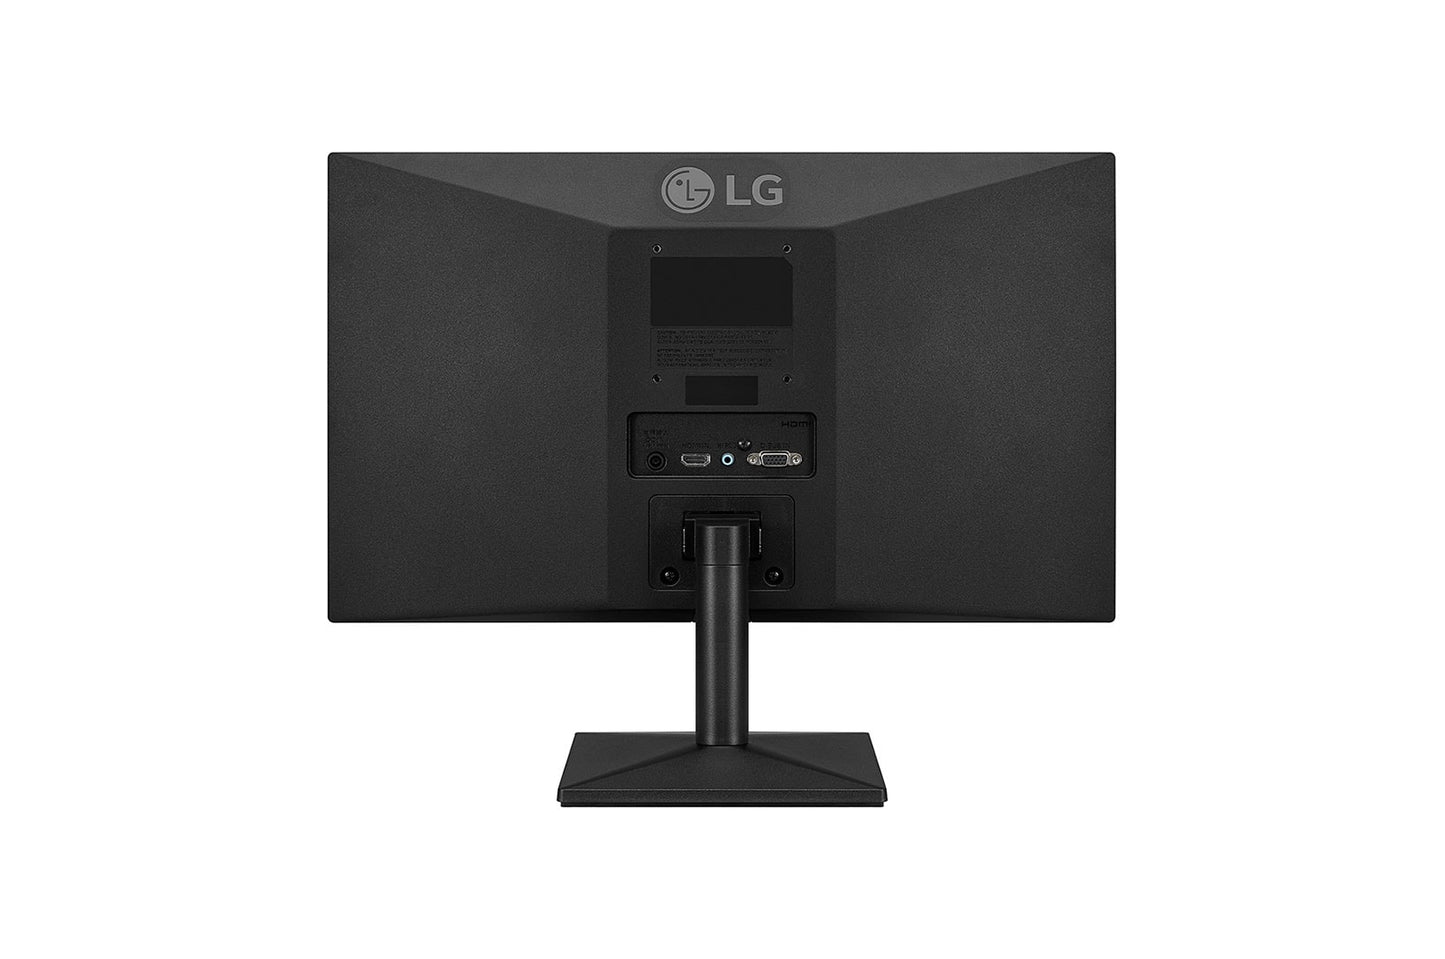 Monitor LG  20MK400HB - 19.5'' LED - 1366 X 768 / TN